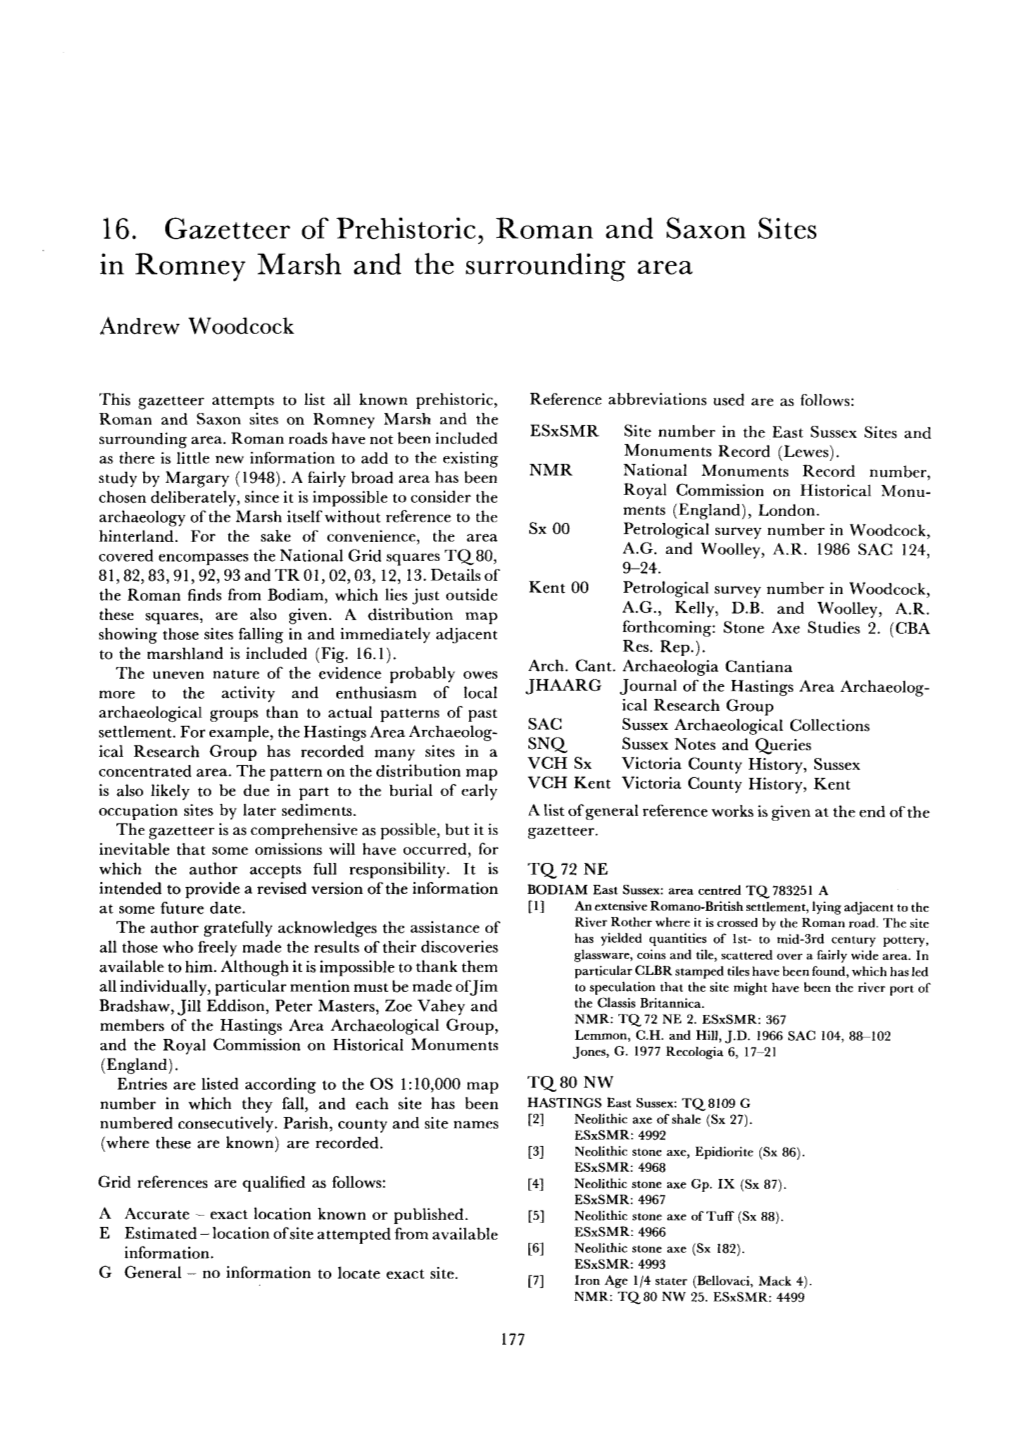 16. Gazetteer of Prehistoric, Roman and Saxon Sites in Romney Marsh and the Surrounding Area